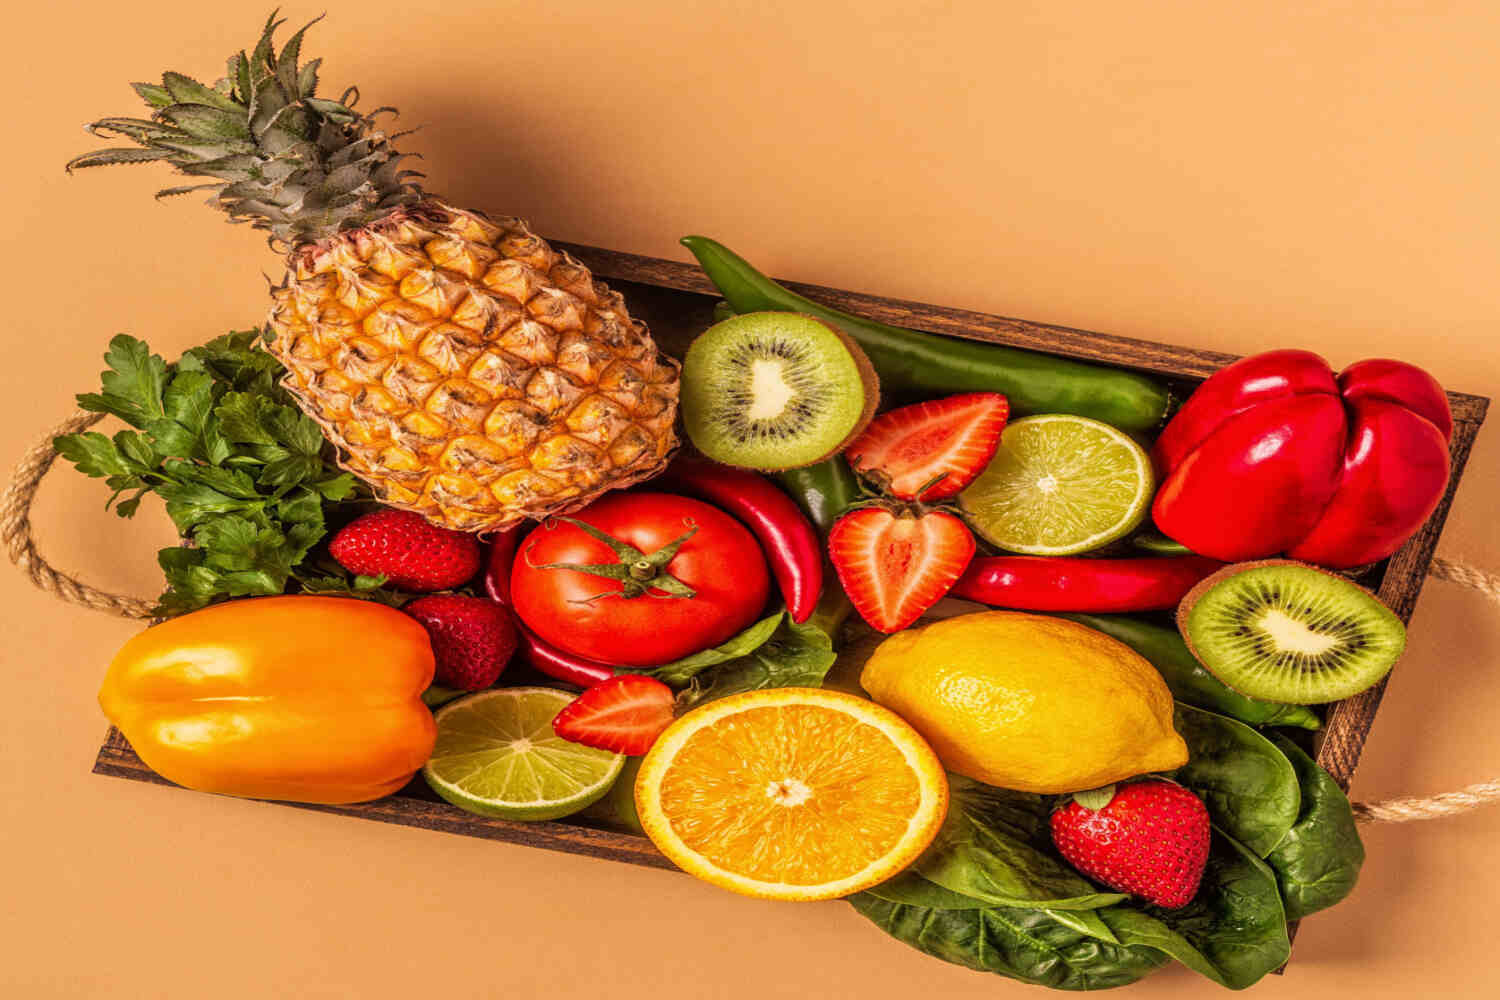 Natural sources of vitamin C